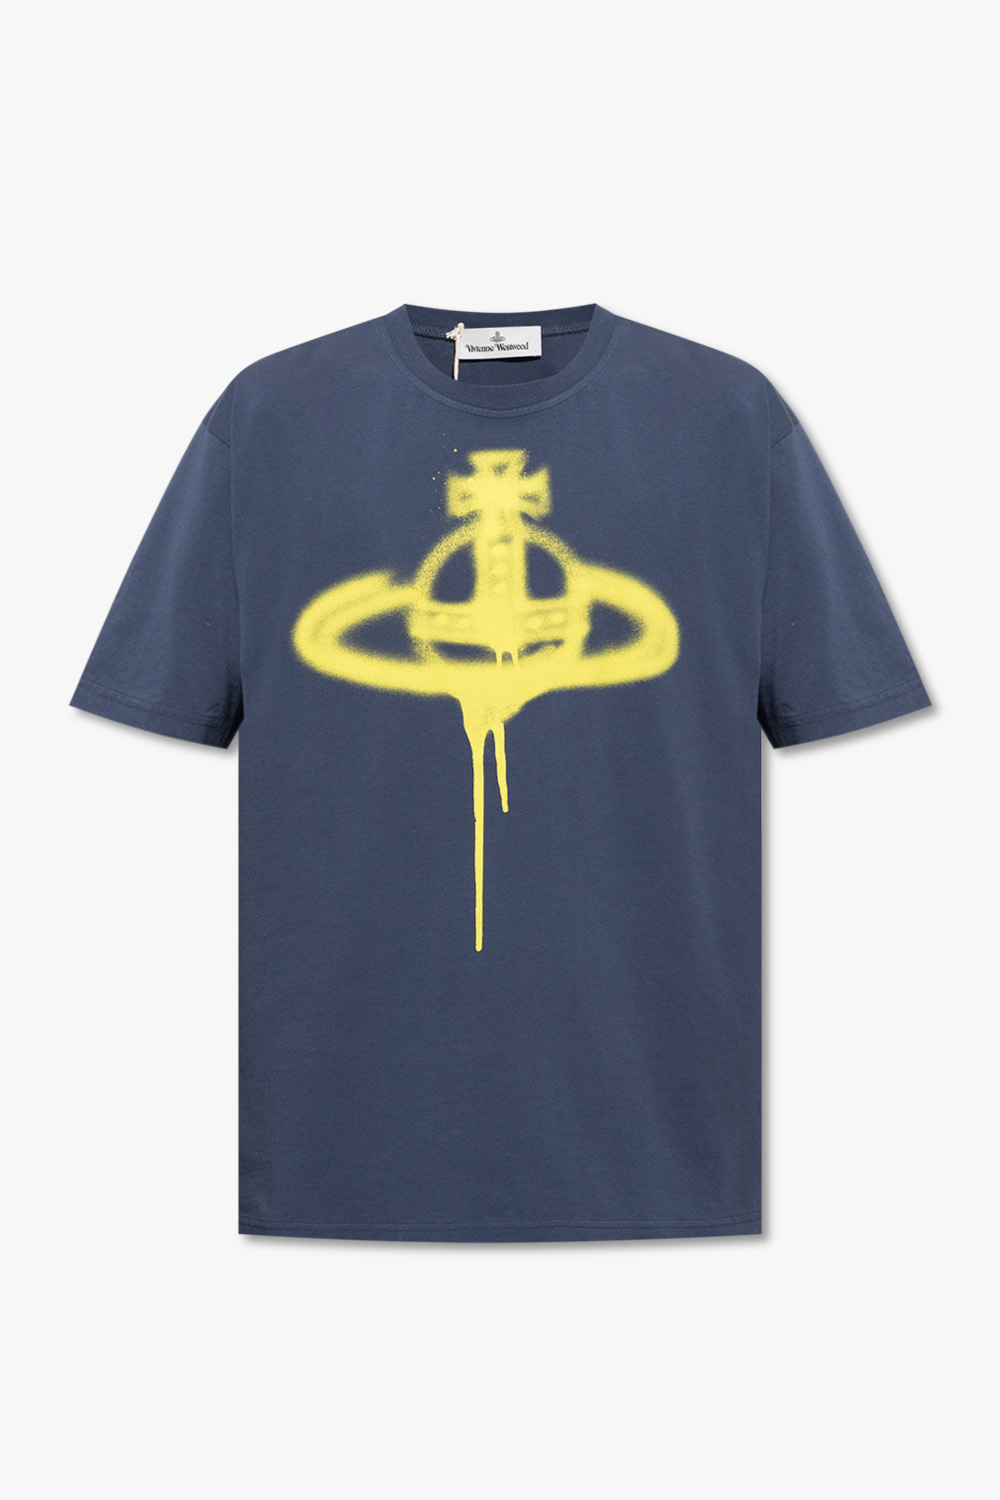 Vivienne Westwood T-shirt Puma with logo